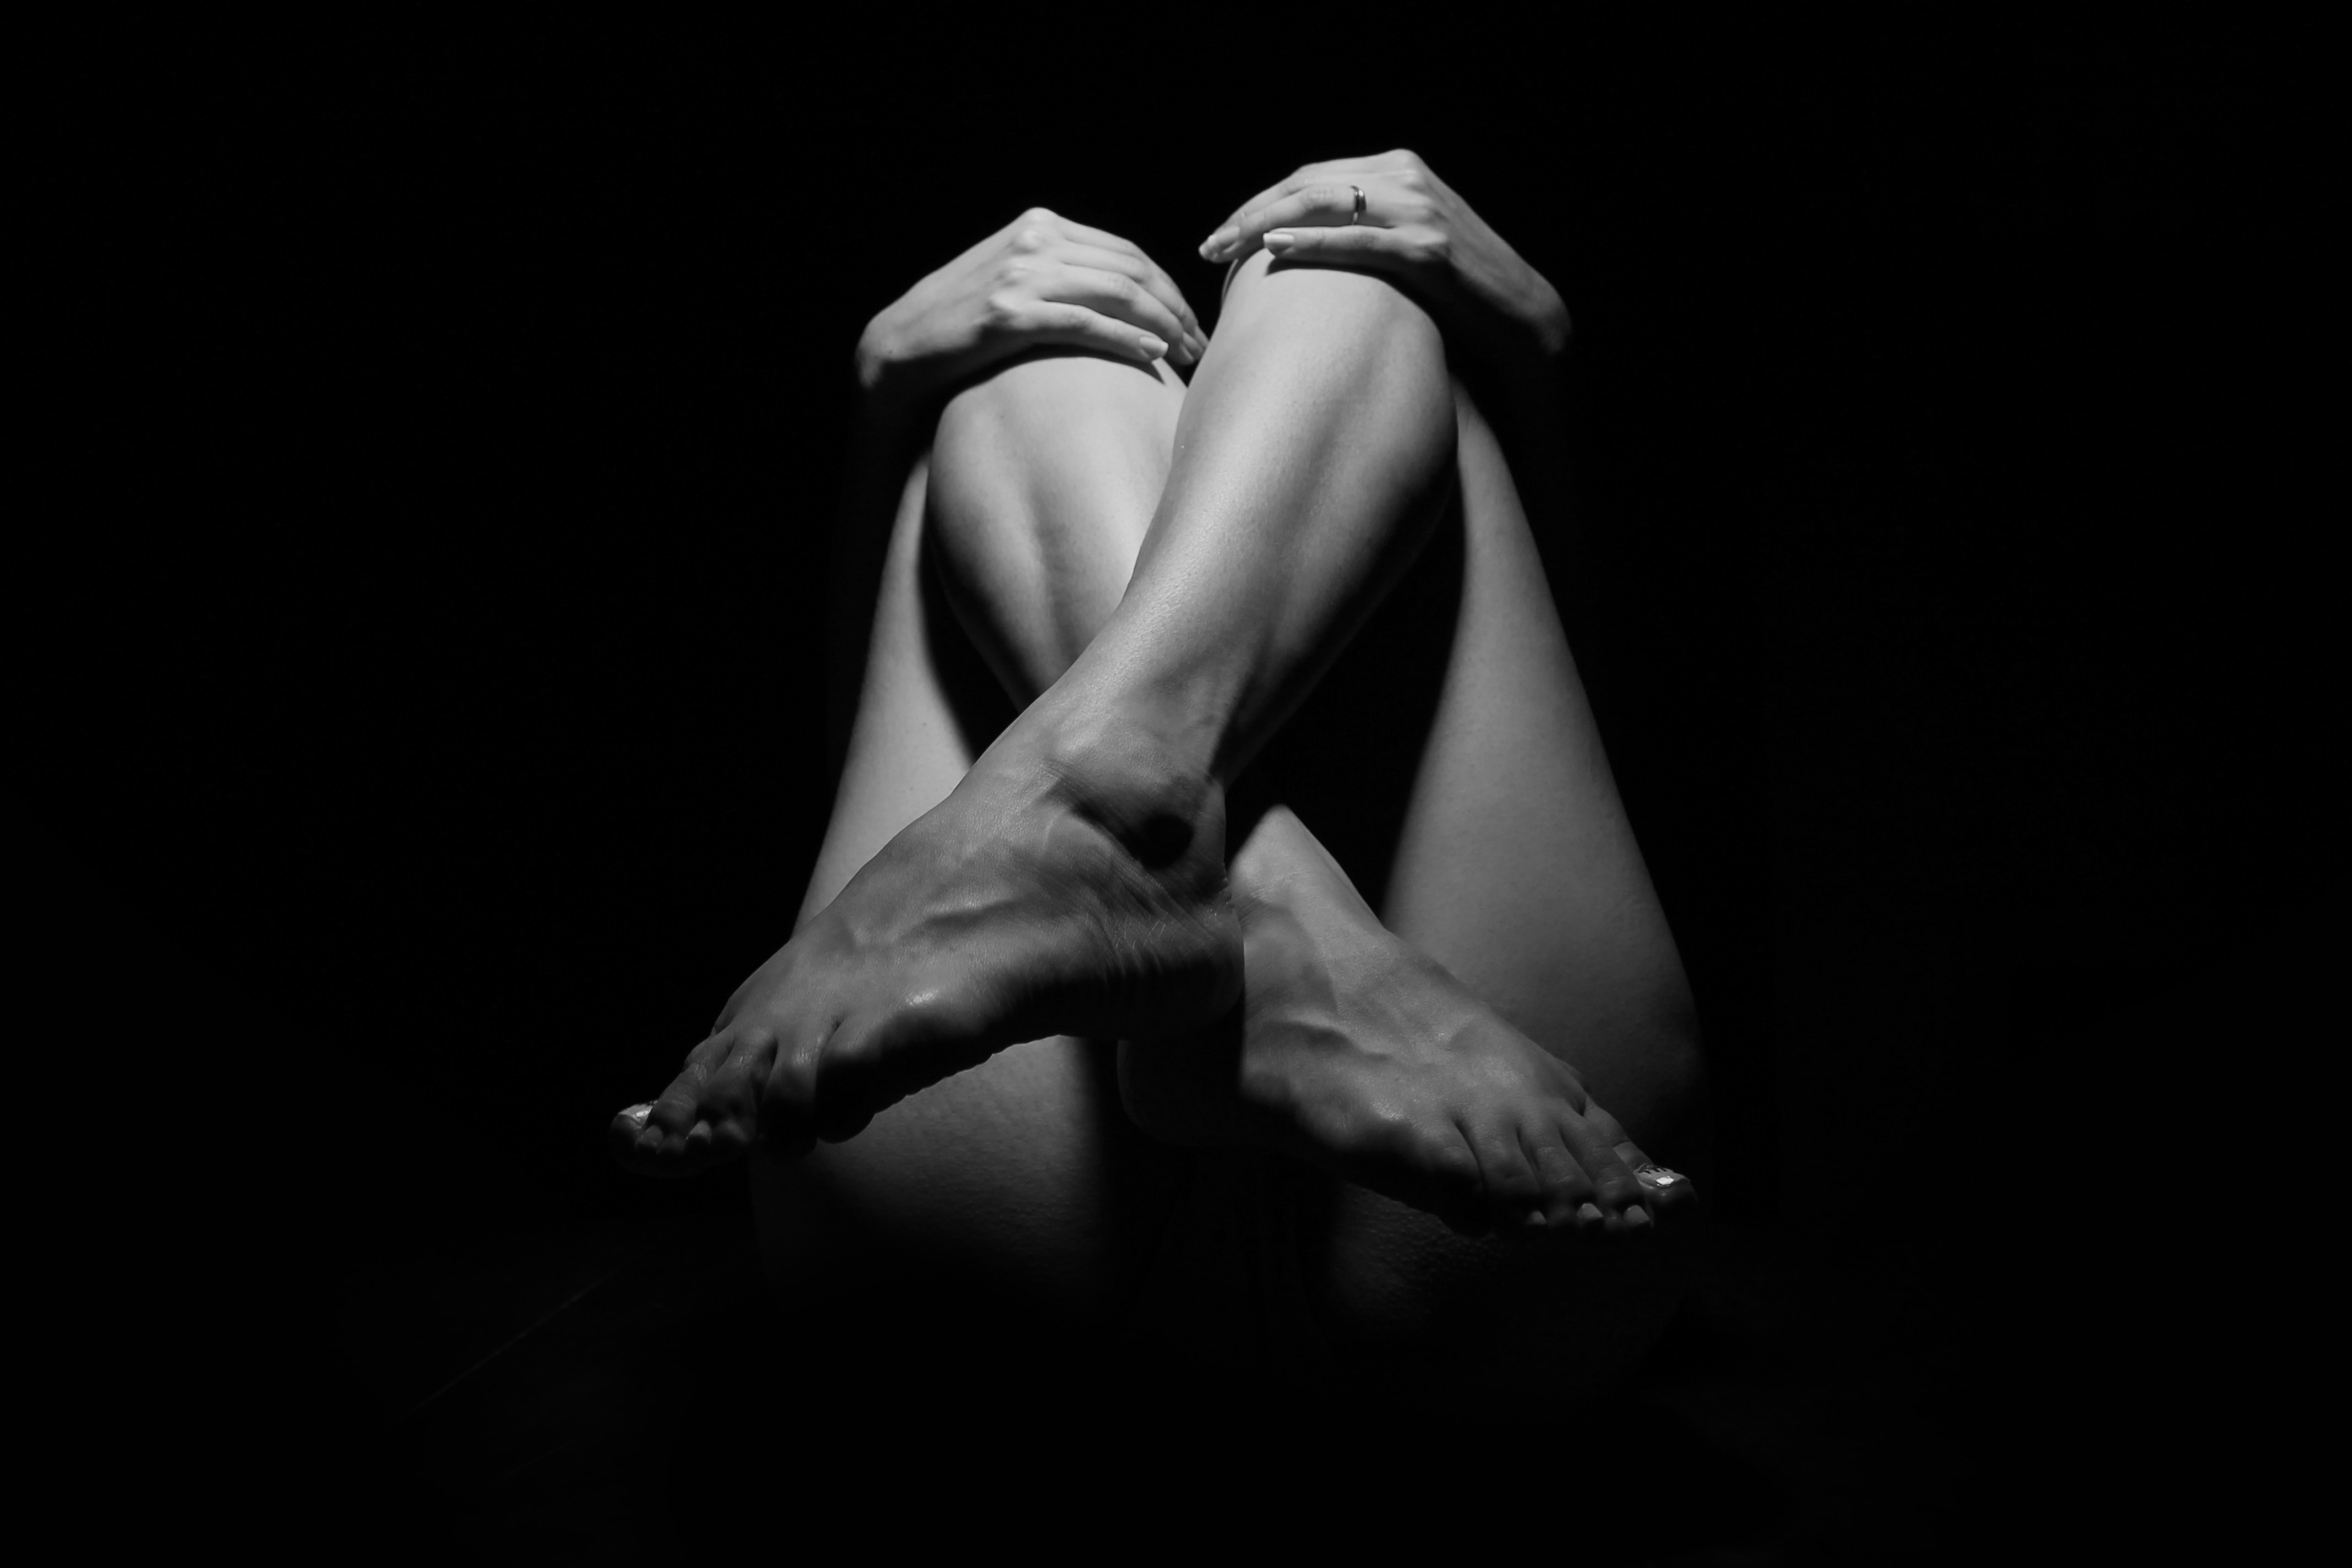 Human Feet Grayscale Photo.